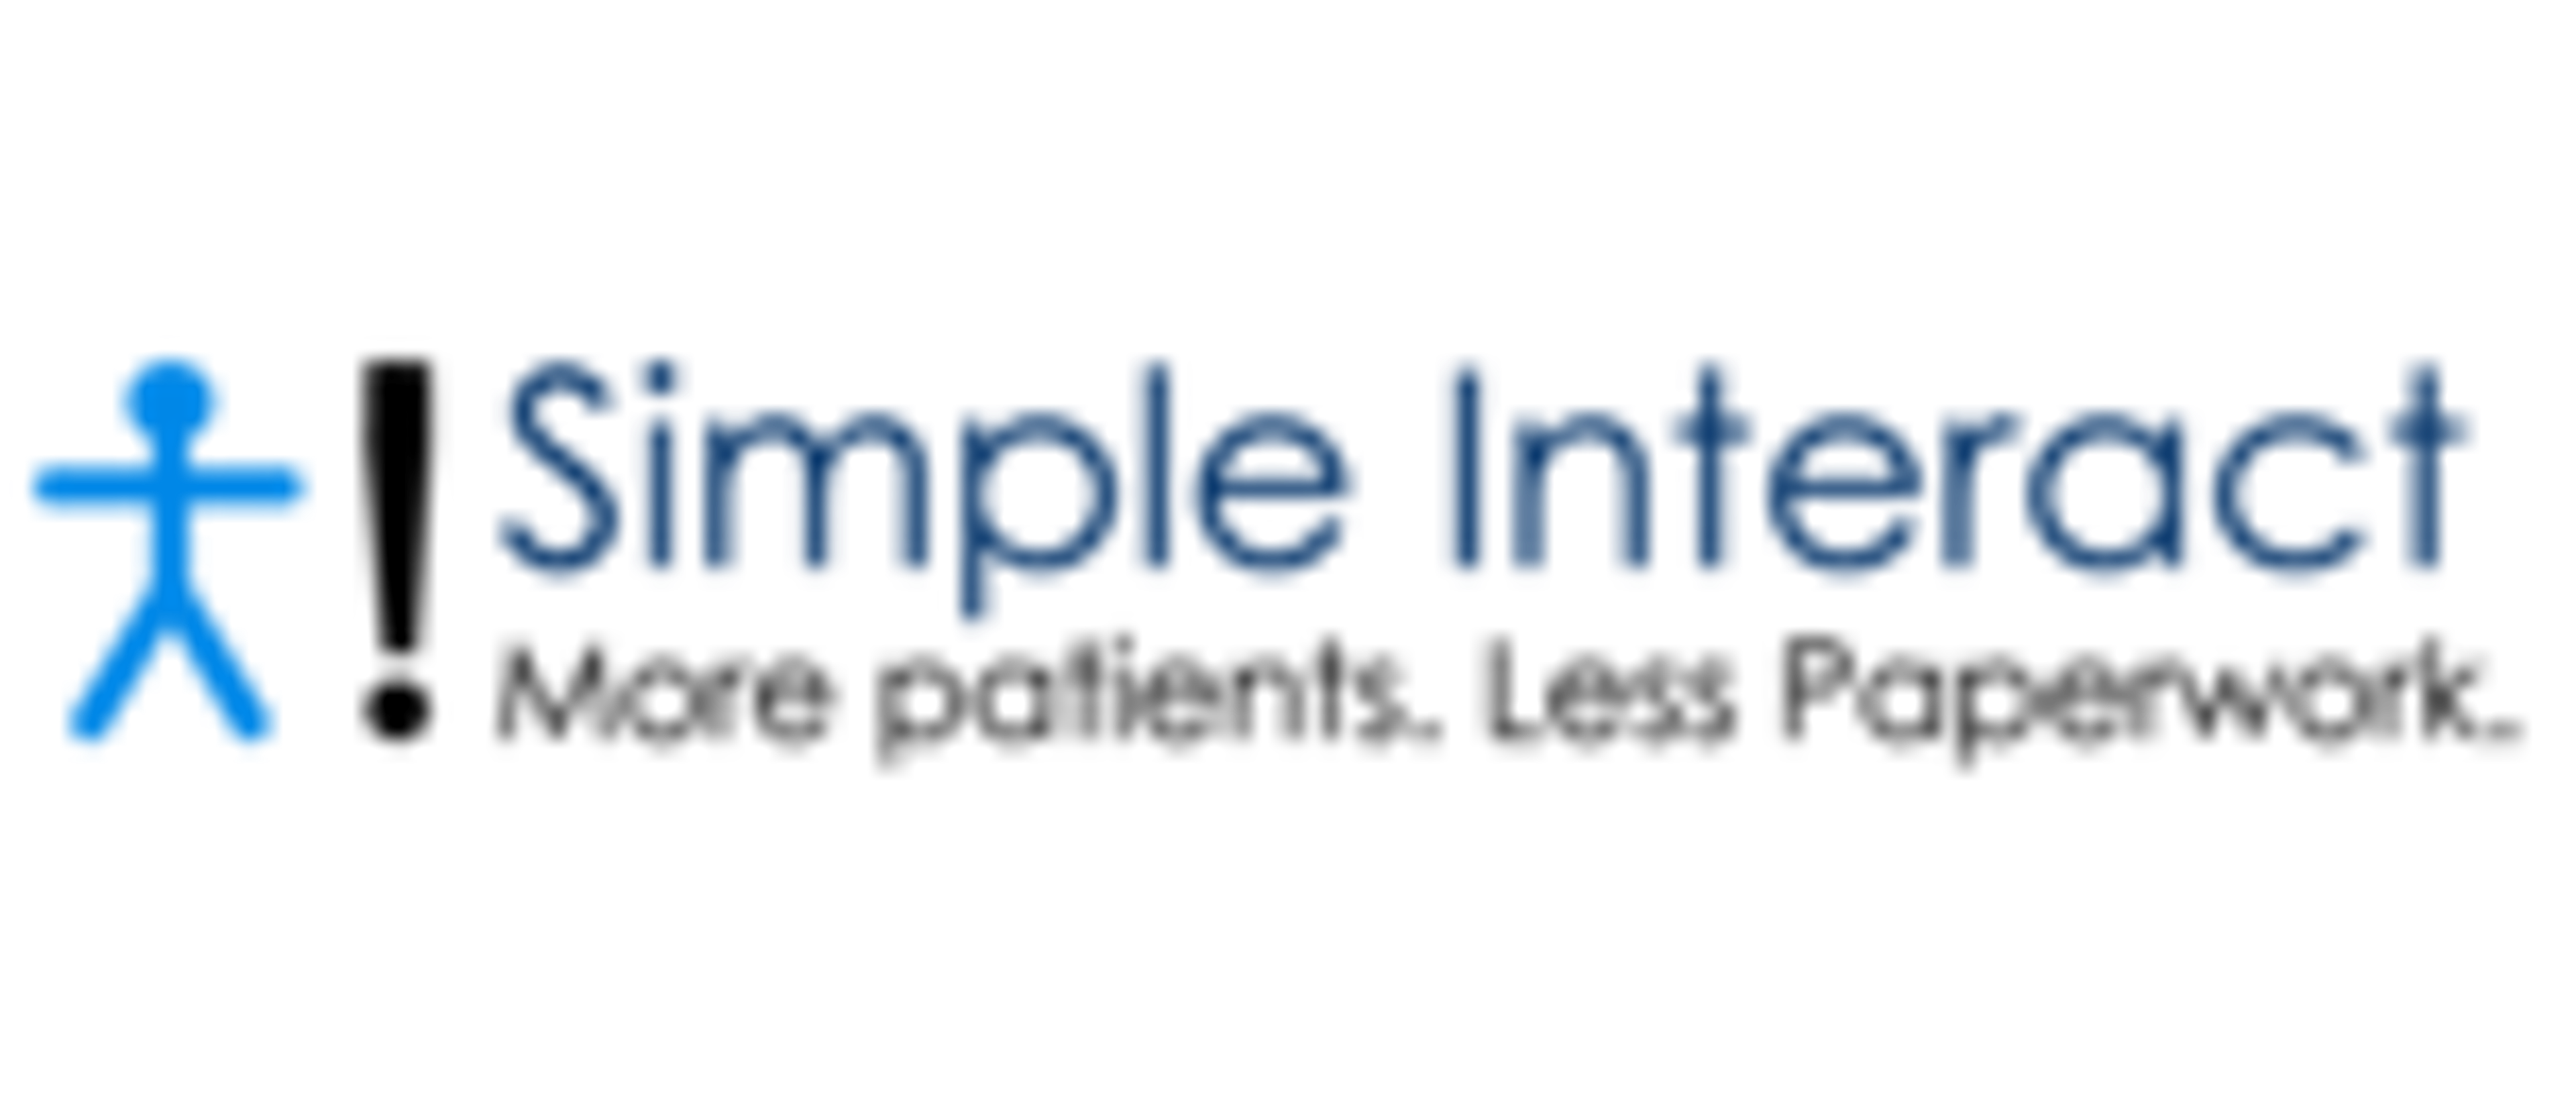 Simple Interact Logo